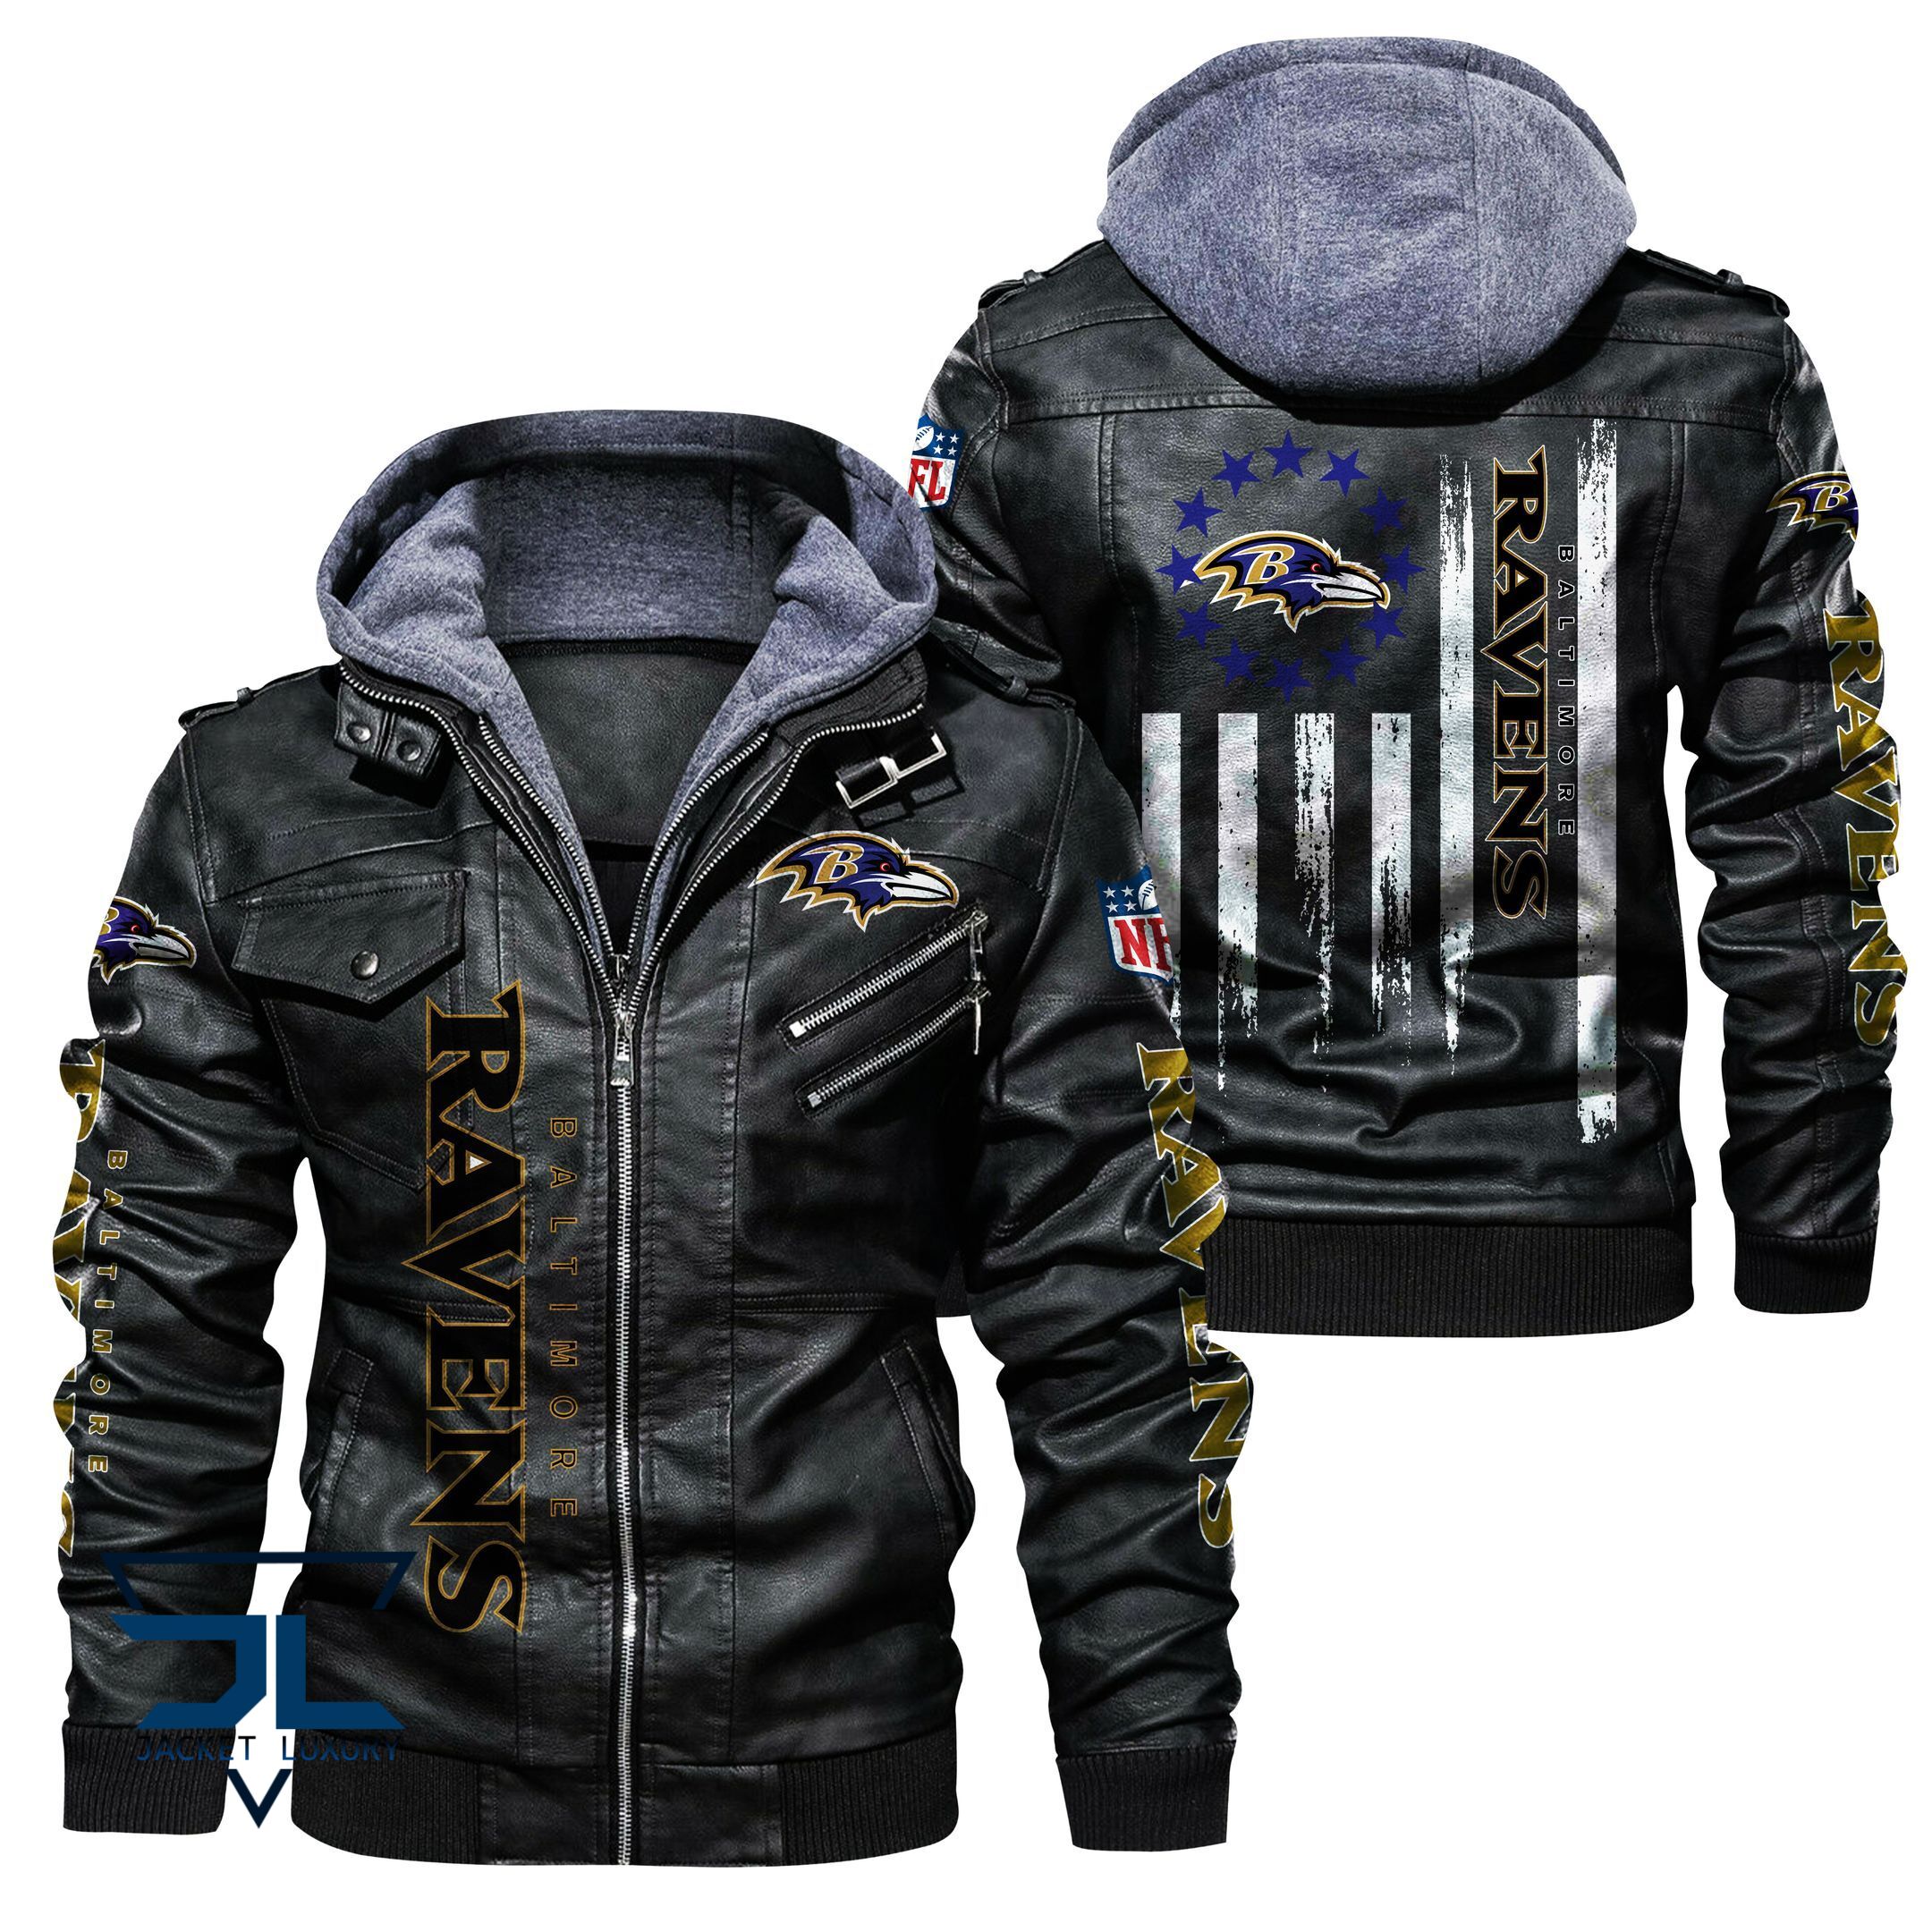 What Leather jacket Sells Best on Techcomshop? 22